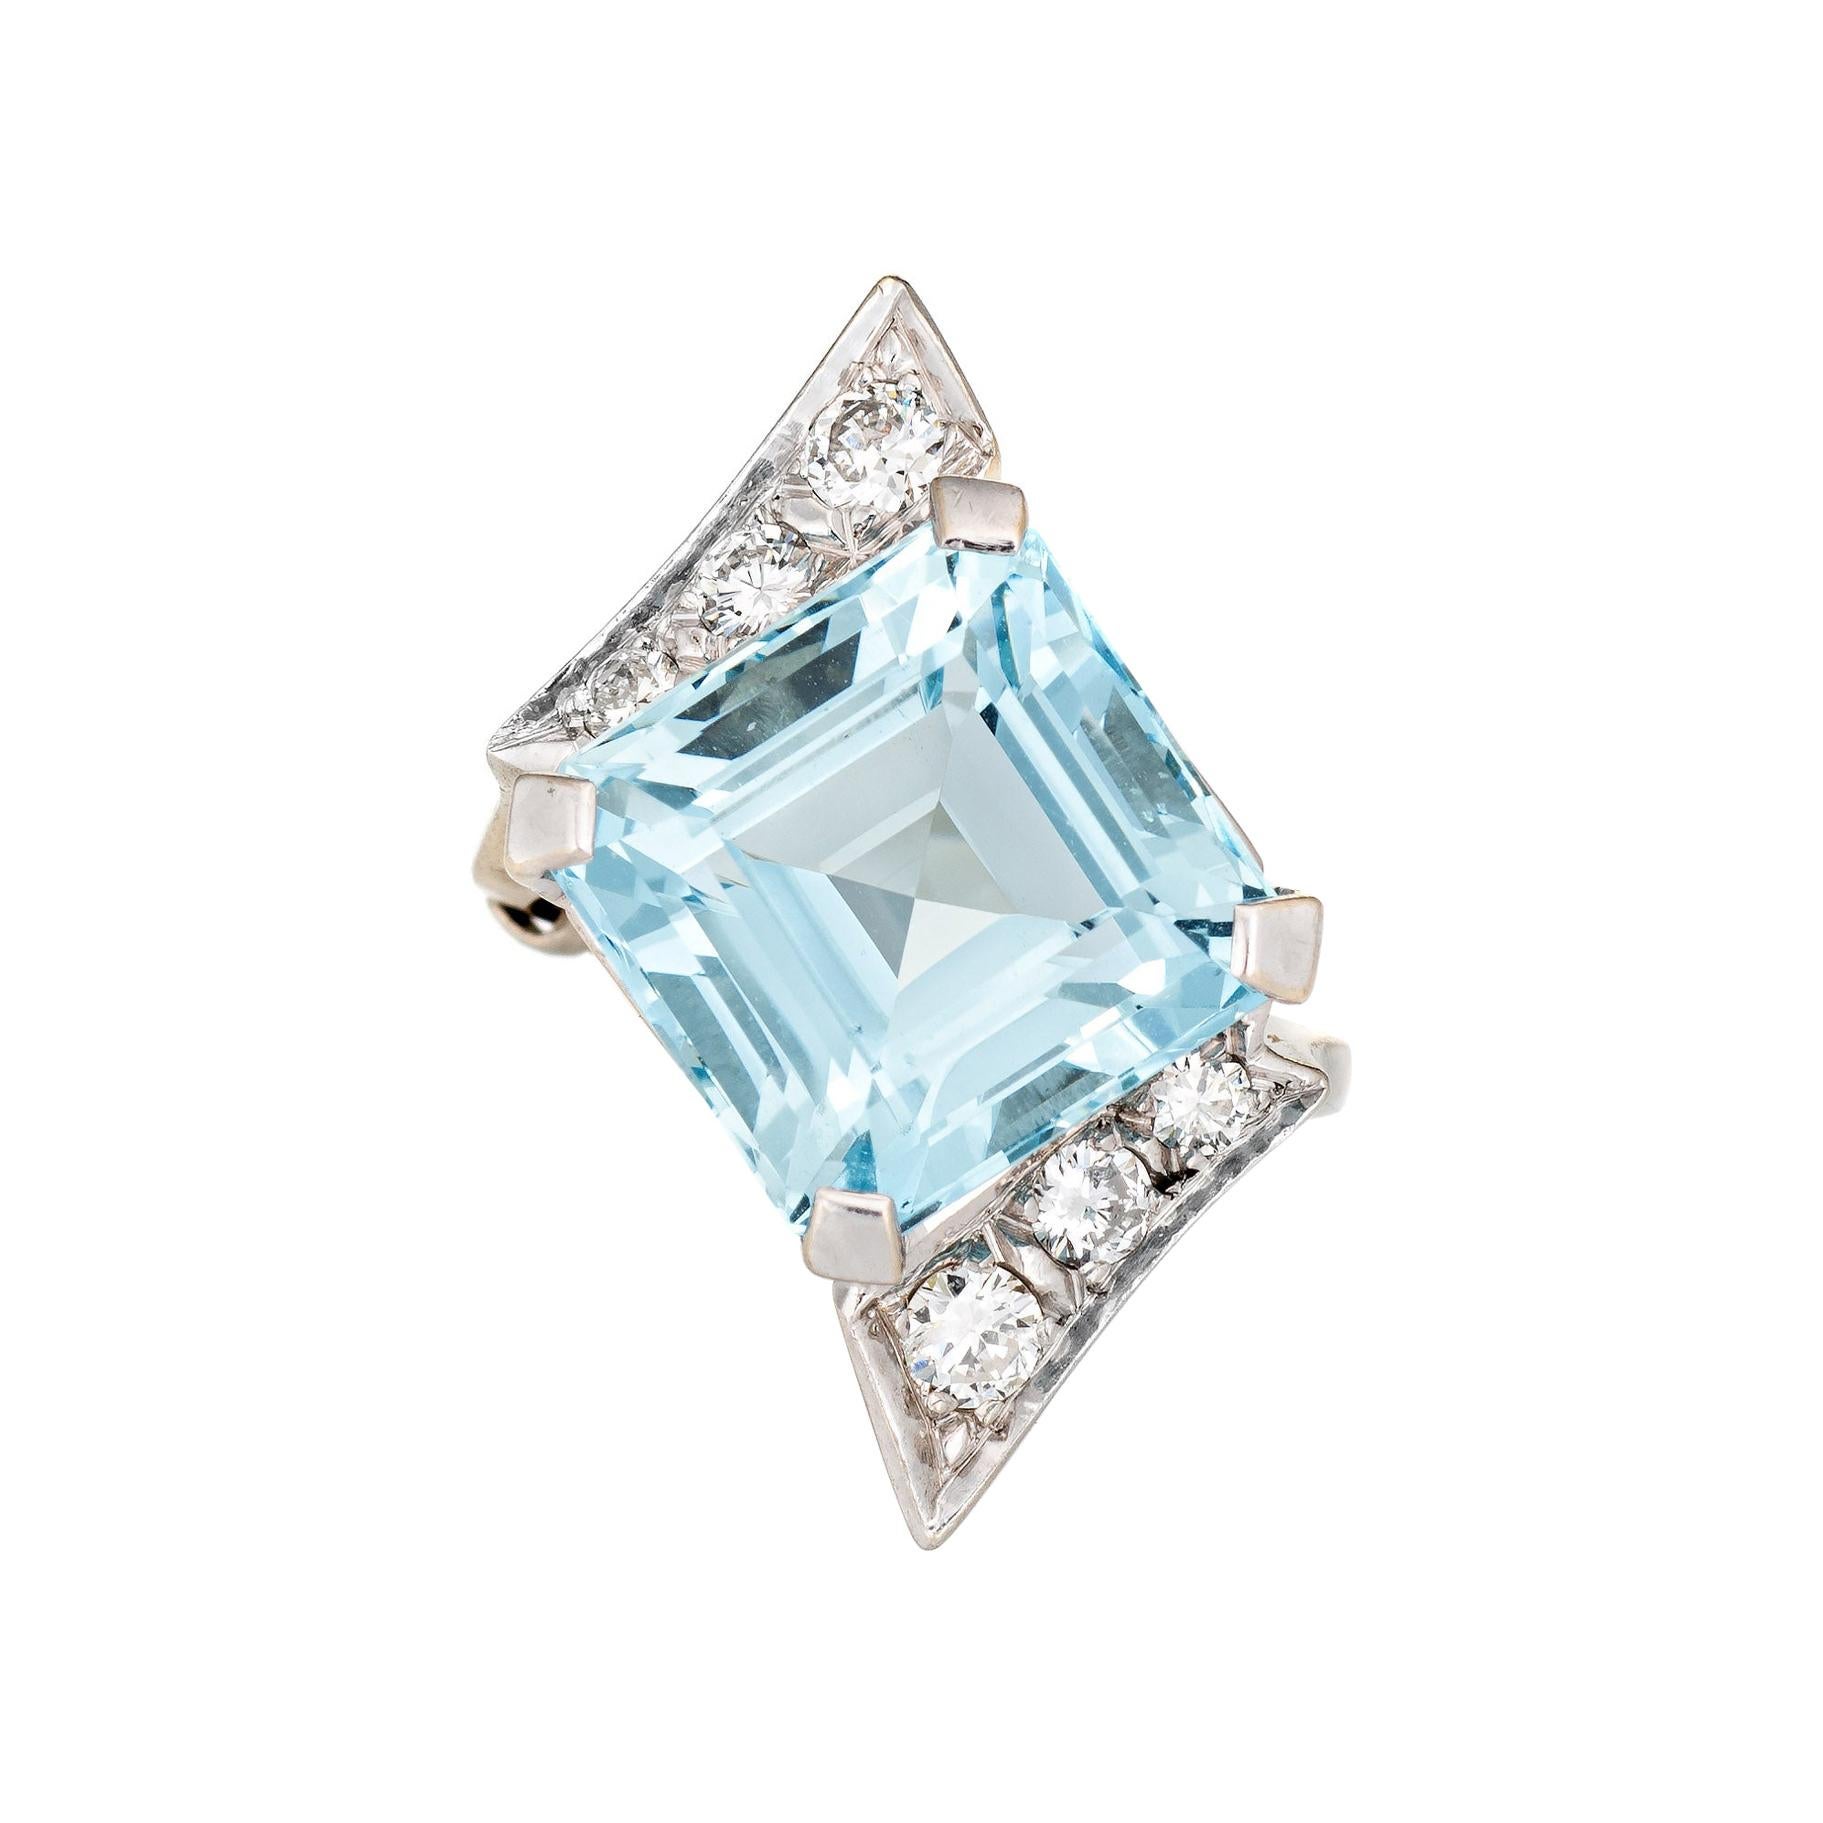 10ct Aquamarine Diamond Ring 60s Vintage 14k White Gold Cocktail Jewelry